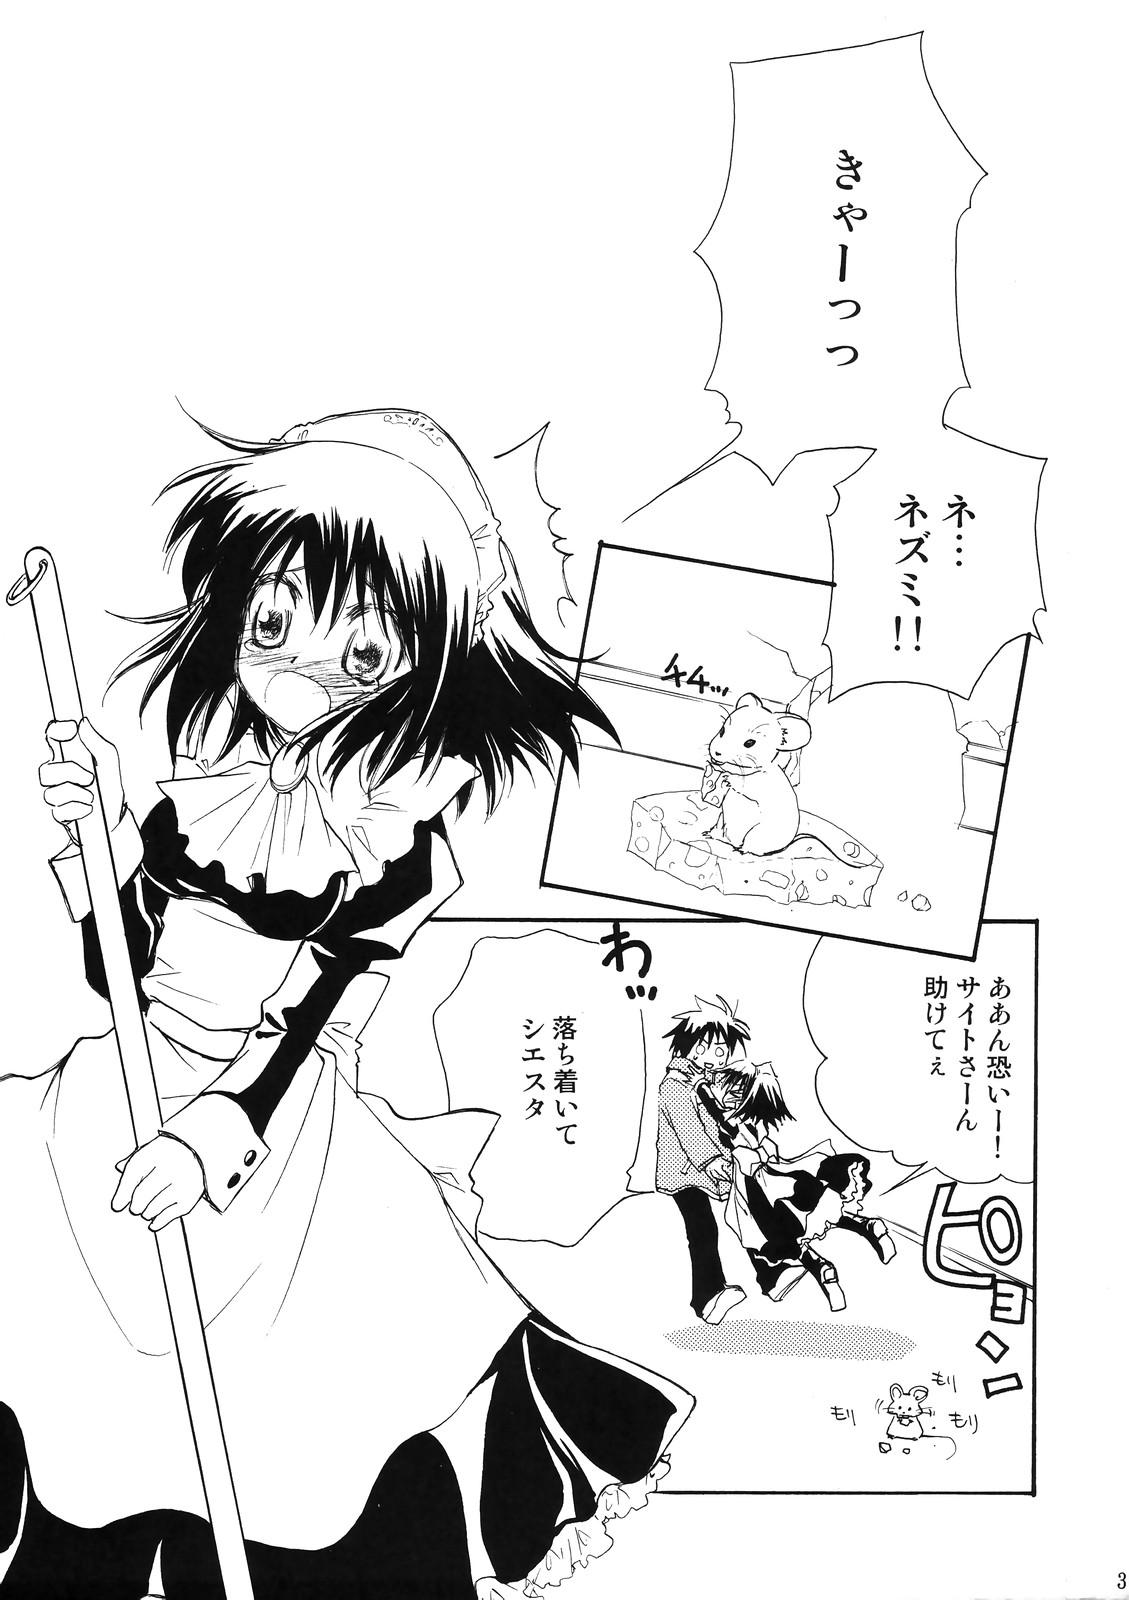 Busty Suki tte itte tte itte! - Zero no tsukaima Step Fantasy - Page 2